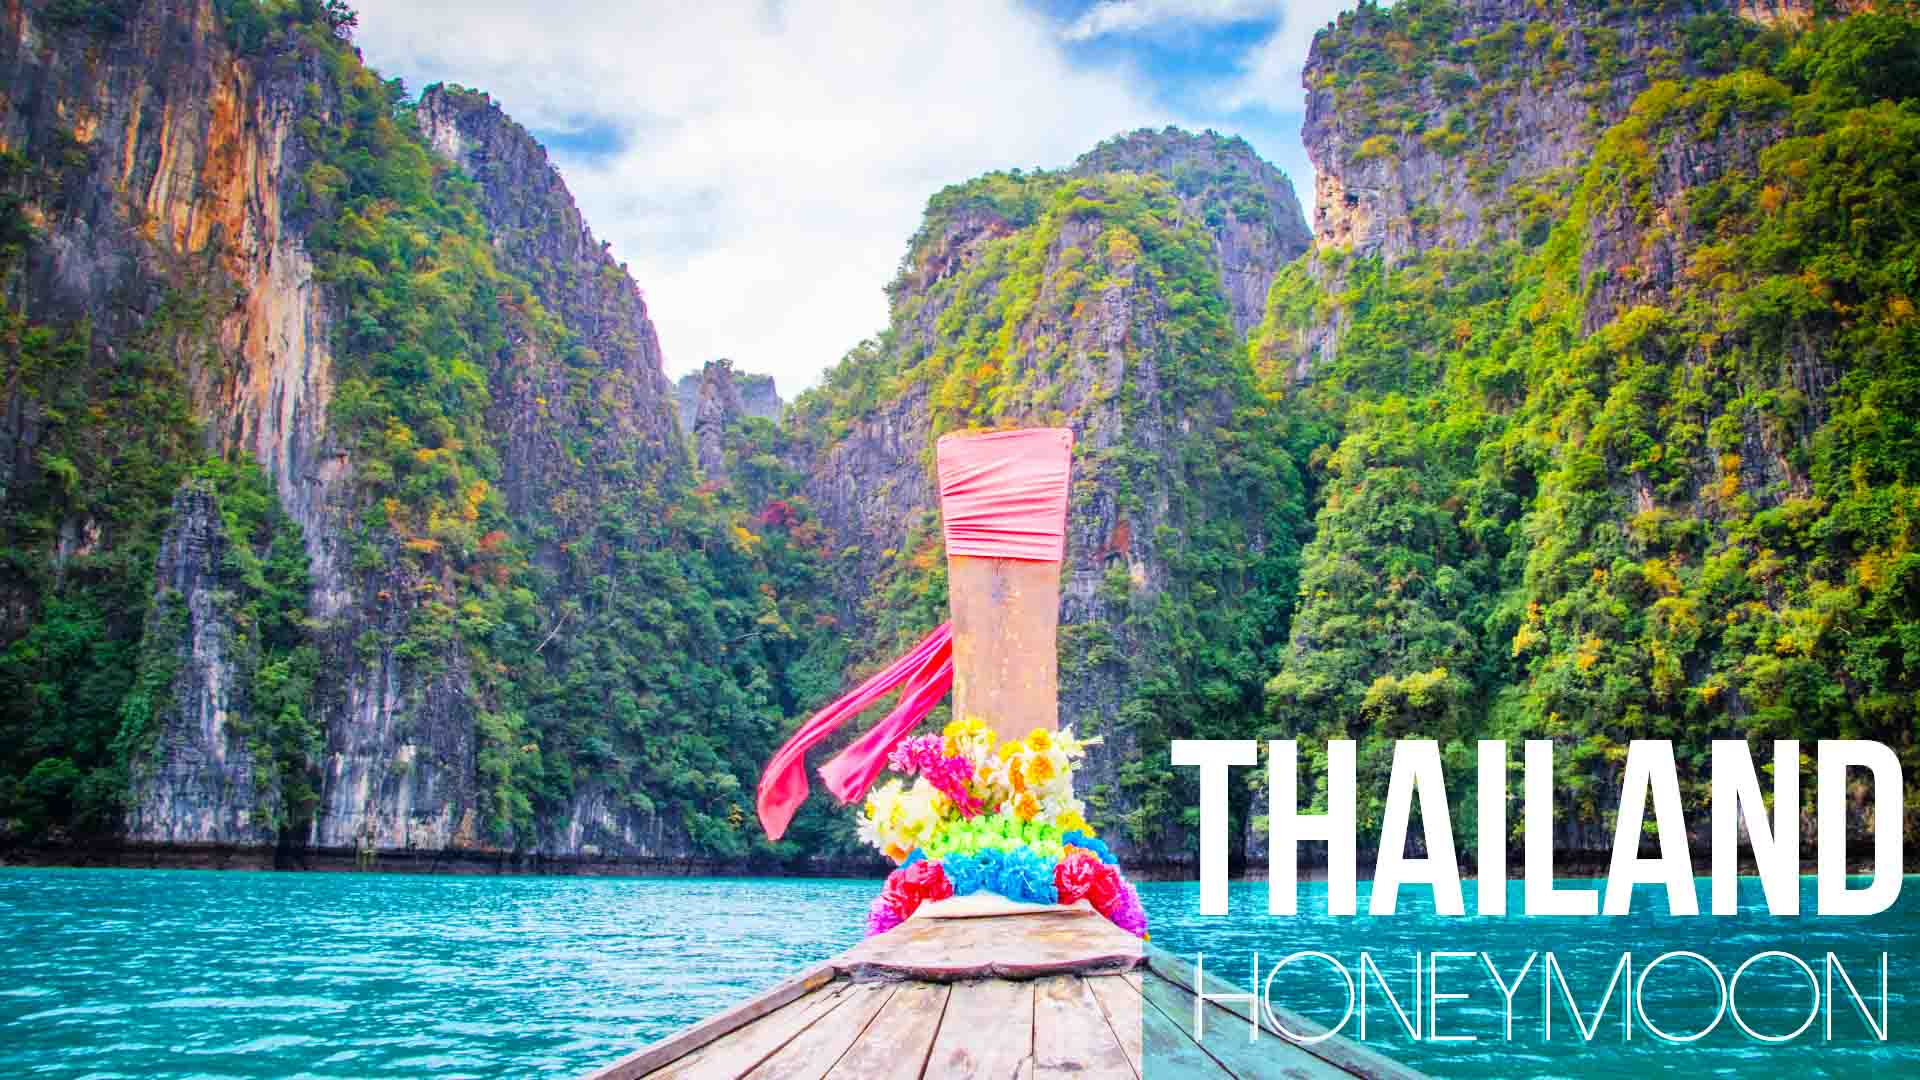 Railay romance – a lovers' journey to Thailand's honeymoon